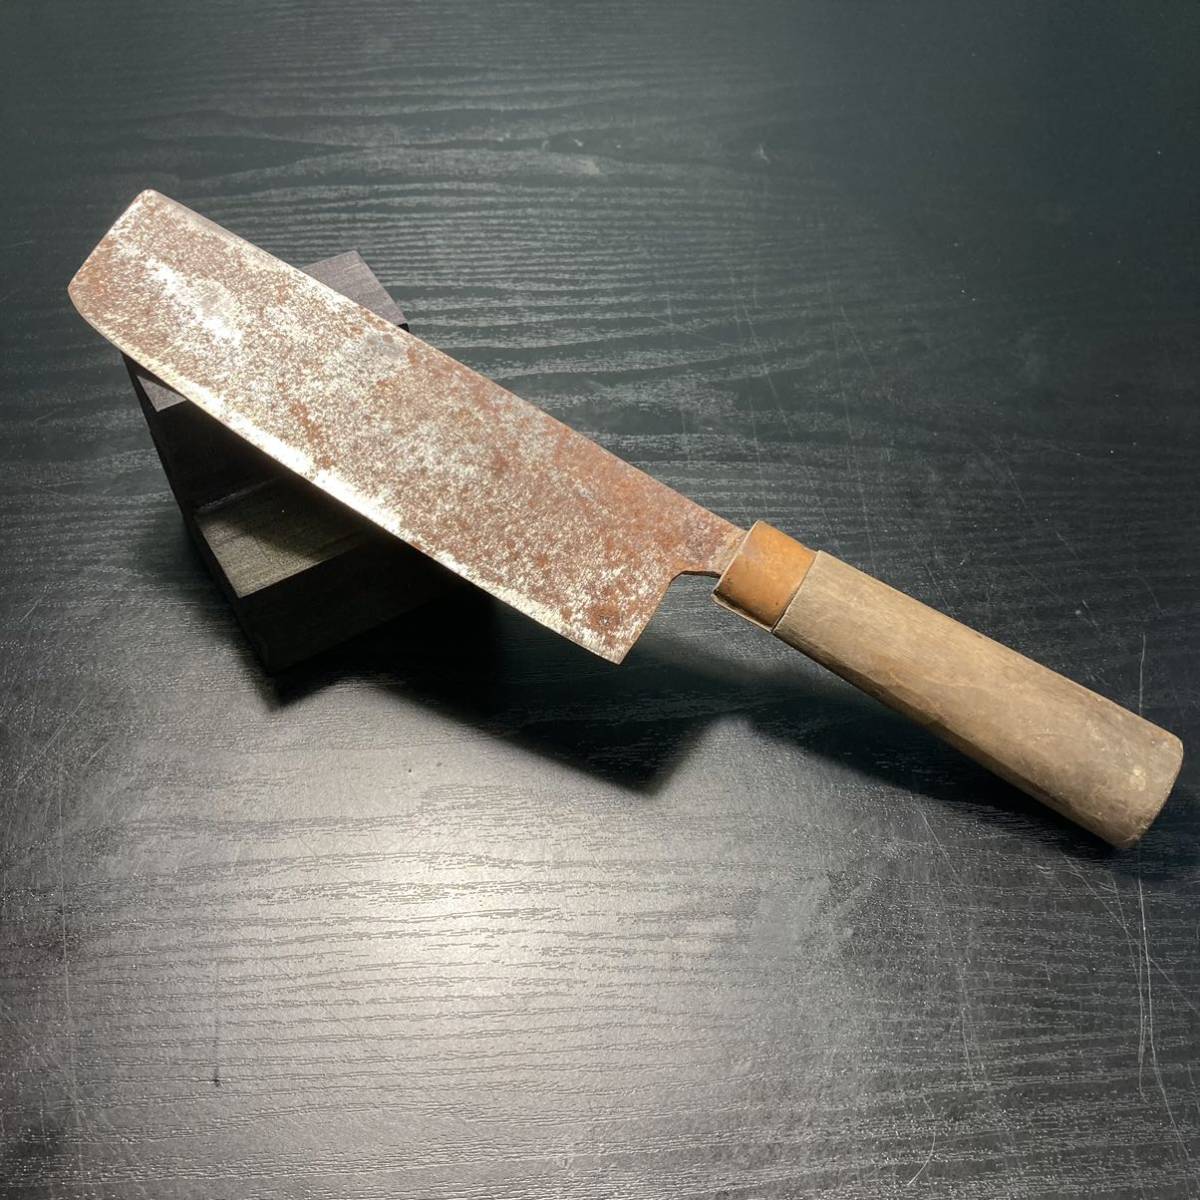 【在銘】菊光刃物店 包丁 日本刀 鍛冶 道具 [Stated name] Kikumitsu Cutlery Shop kitchen knife Japanese sword blacksmith's tool_画像3